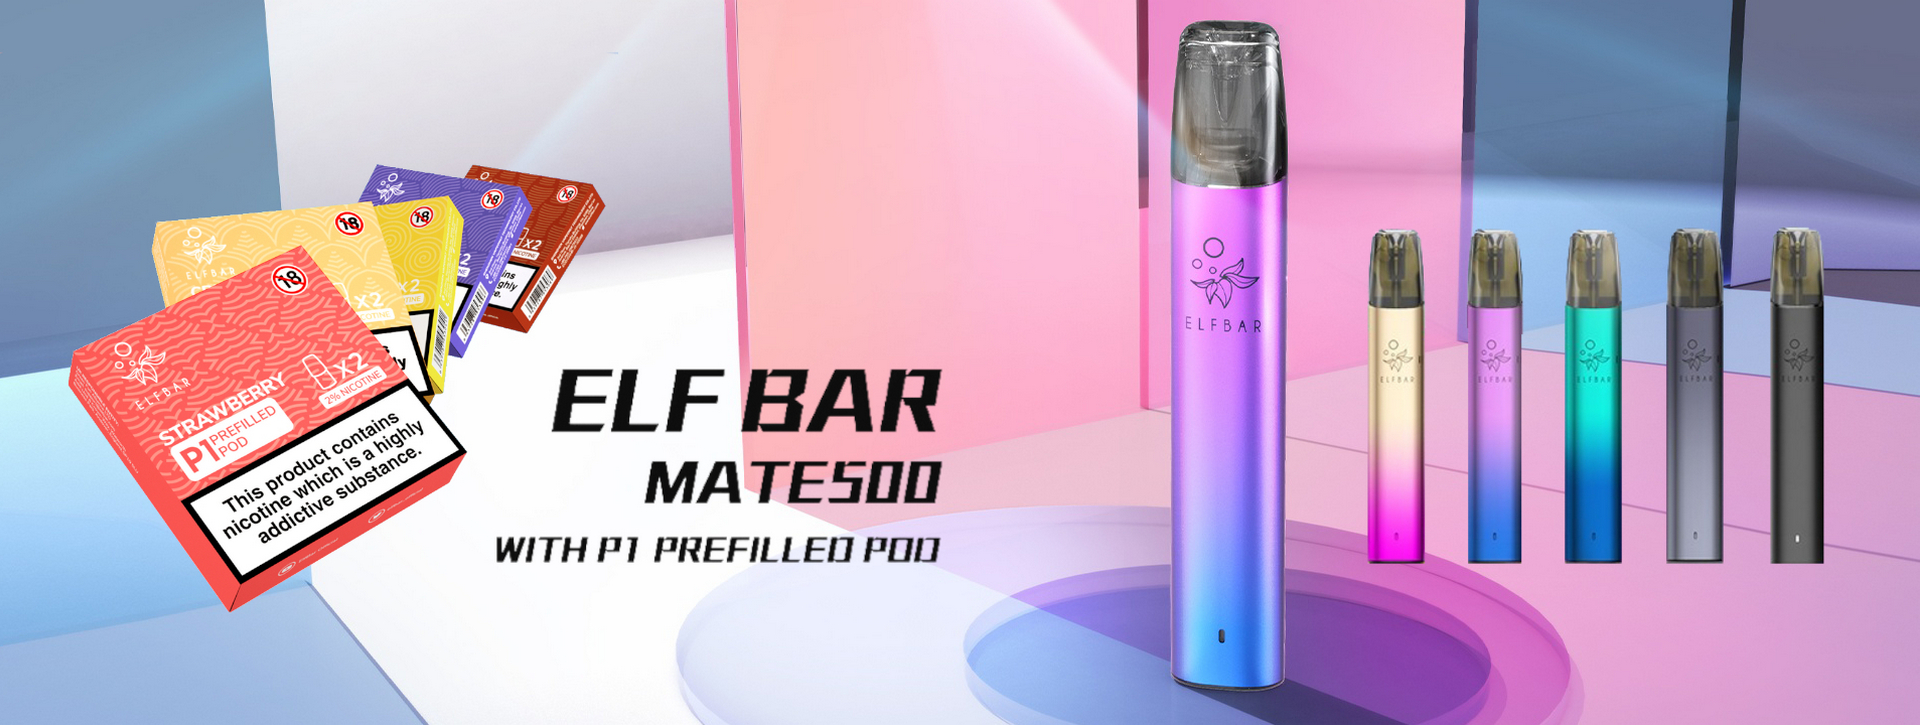 Elf Bar Mate500